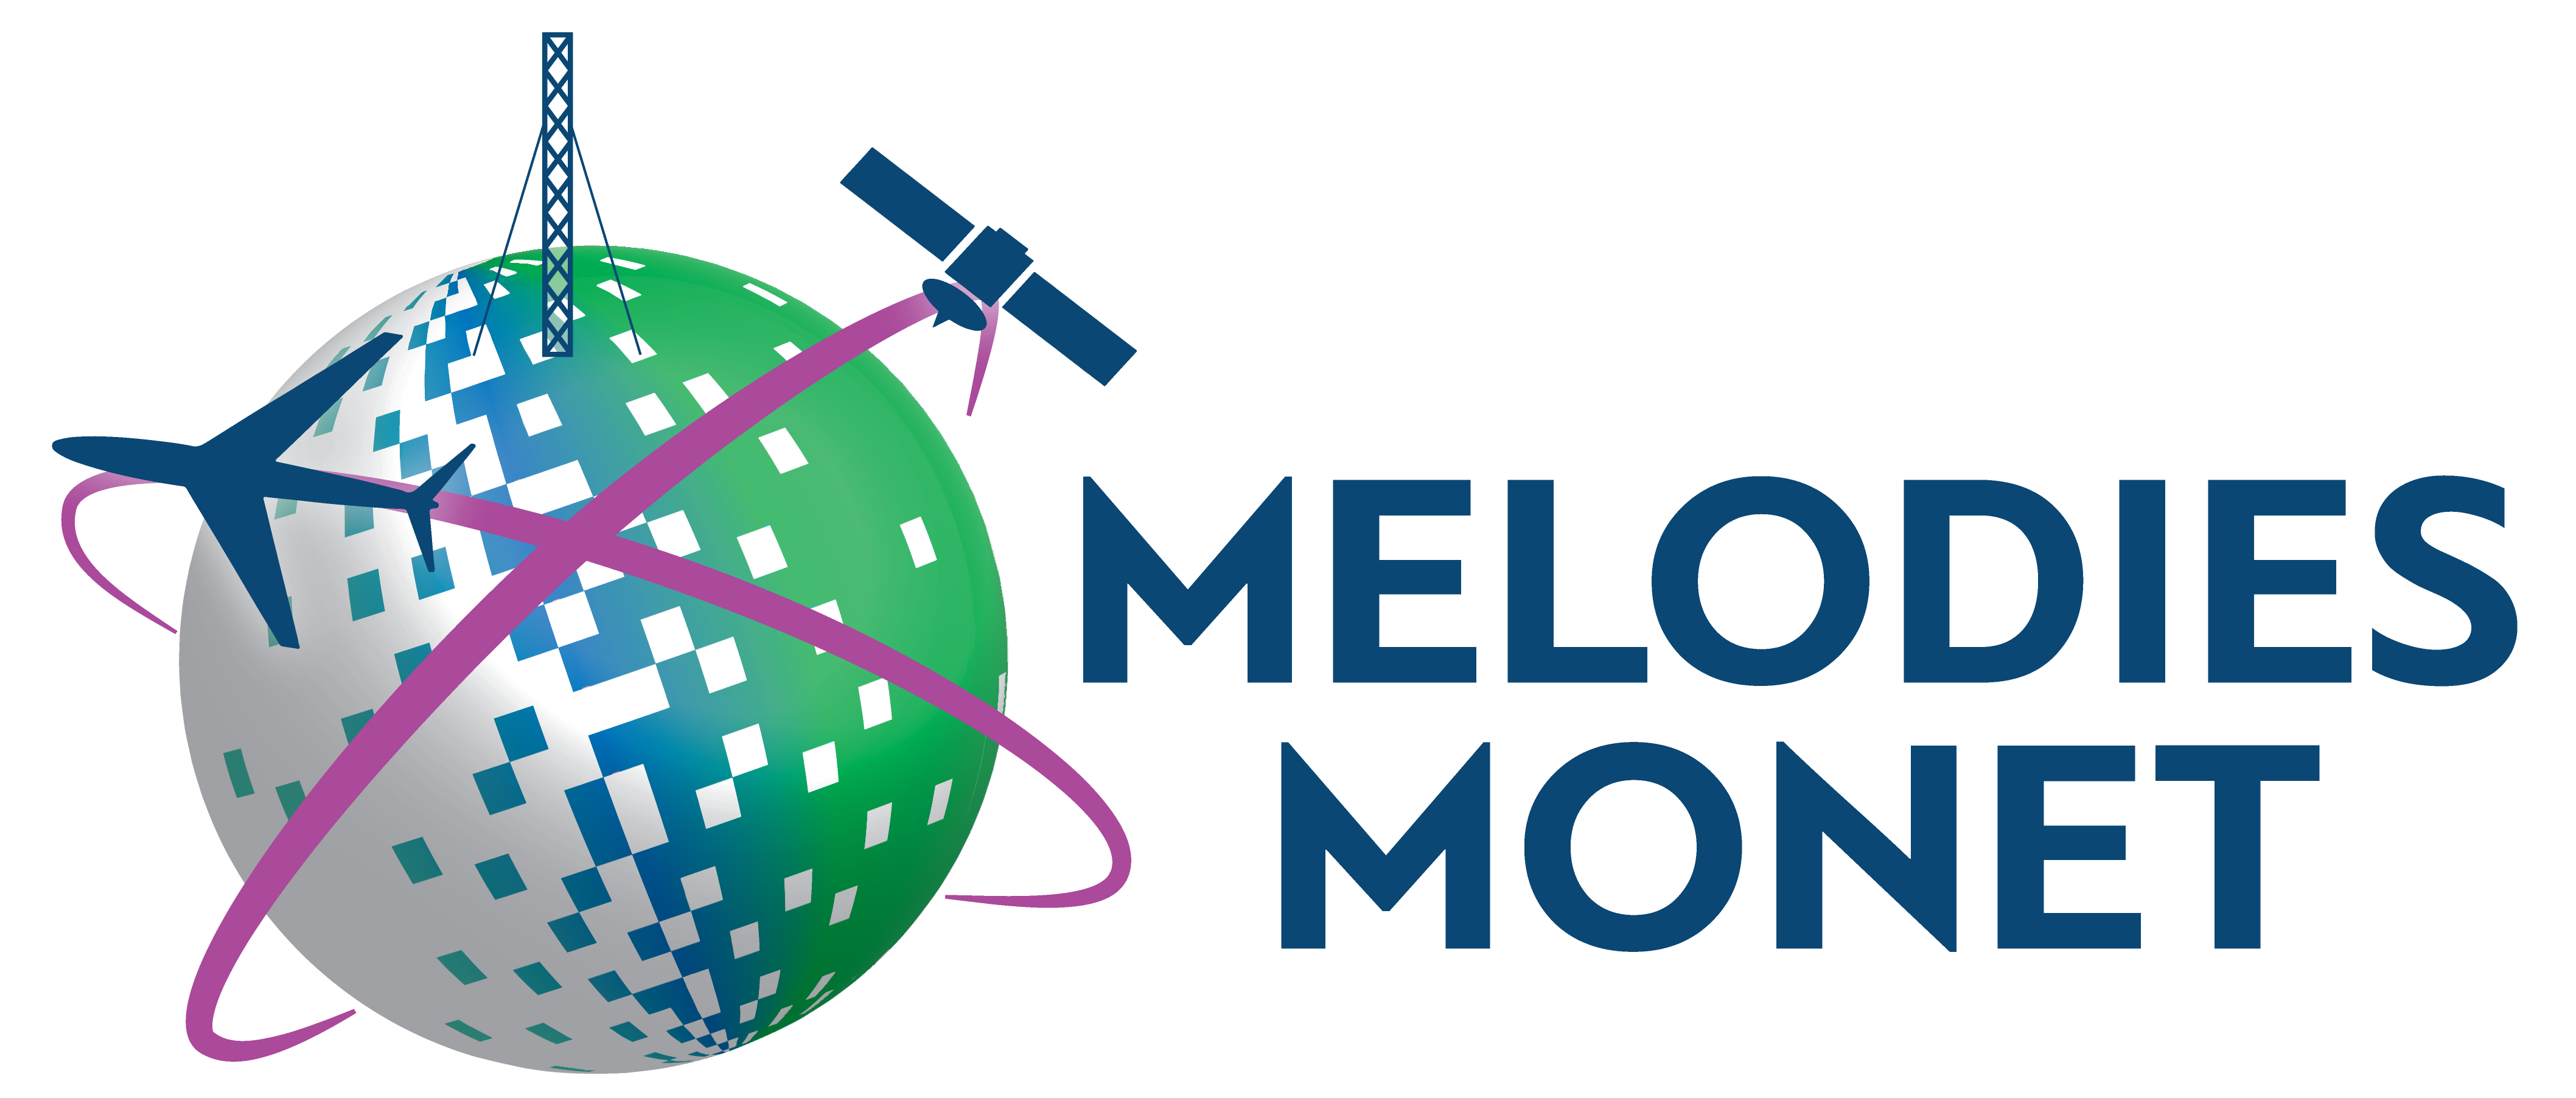 MELODIES MONET logo